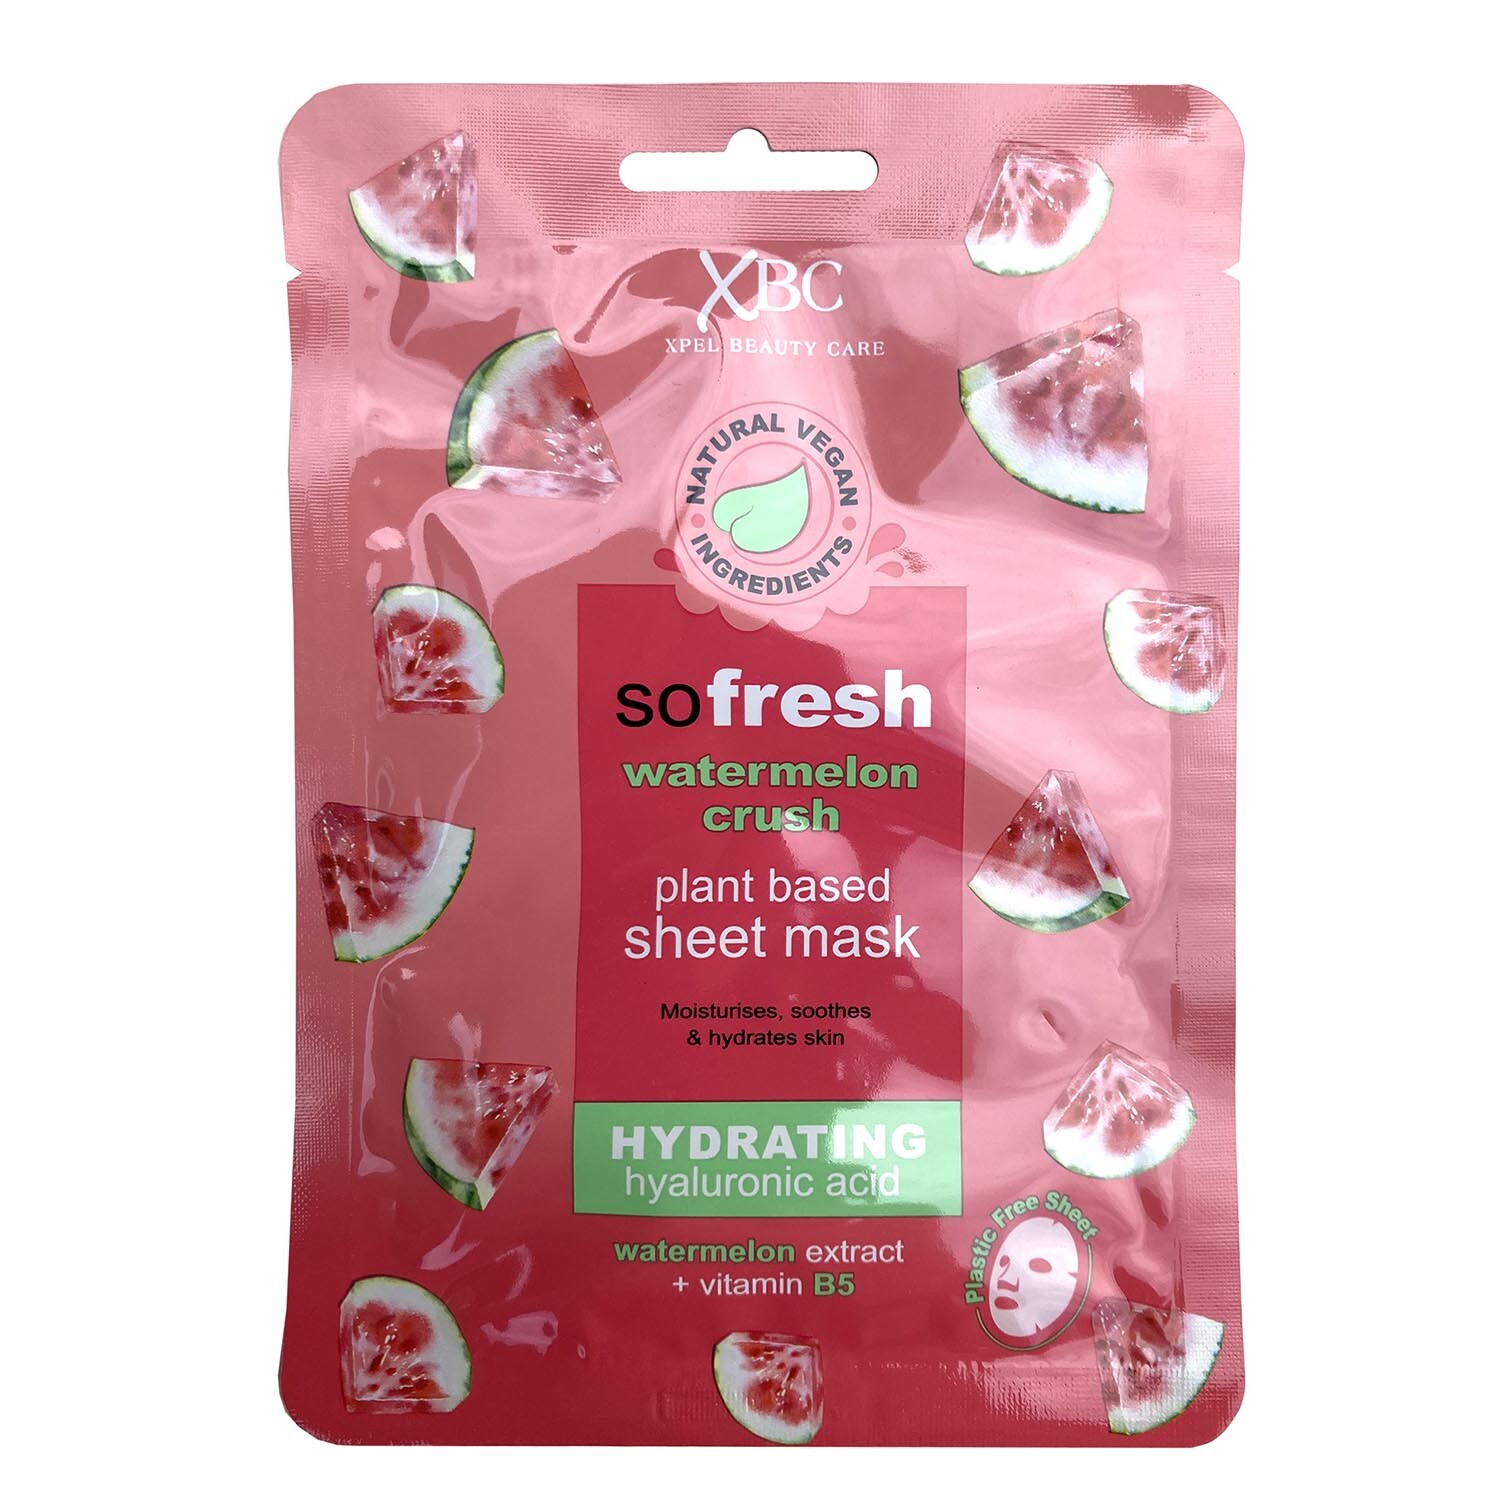 SoFresh Watermelon Crush Sheet Mask - Pink Image